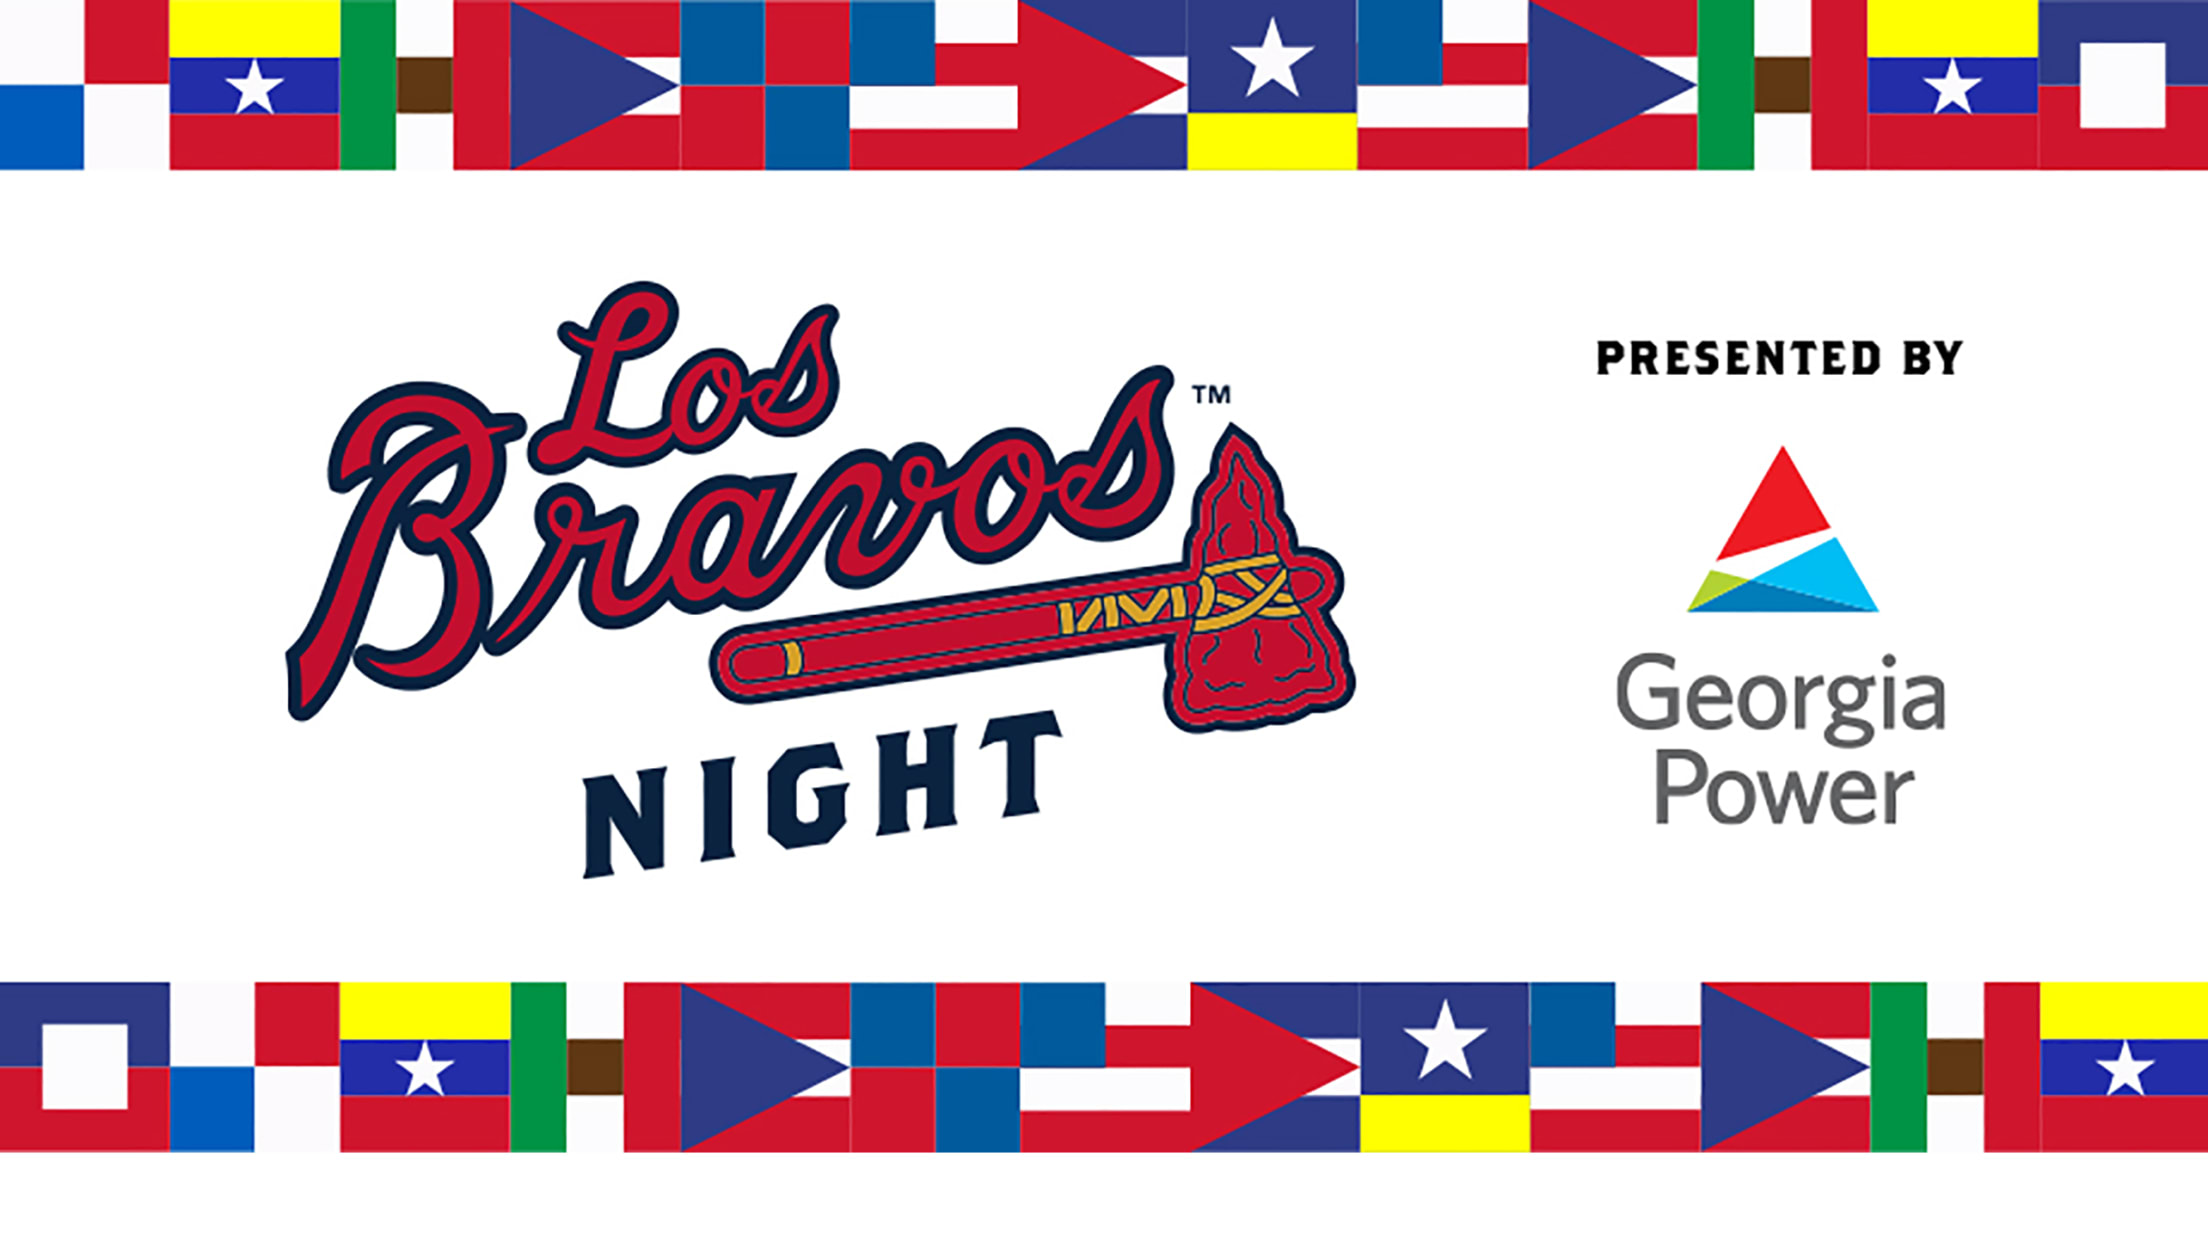 Atlanta Braves to celebrate Hispanic and Latino culture with